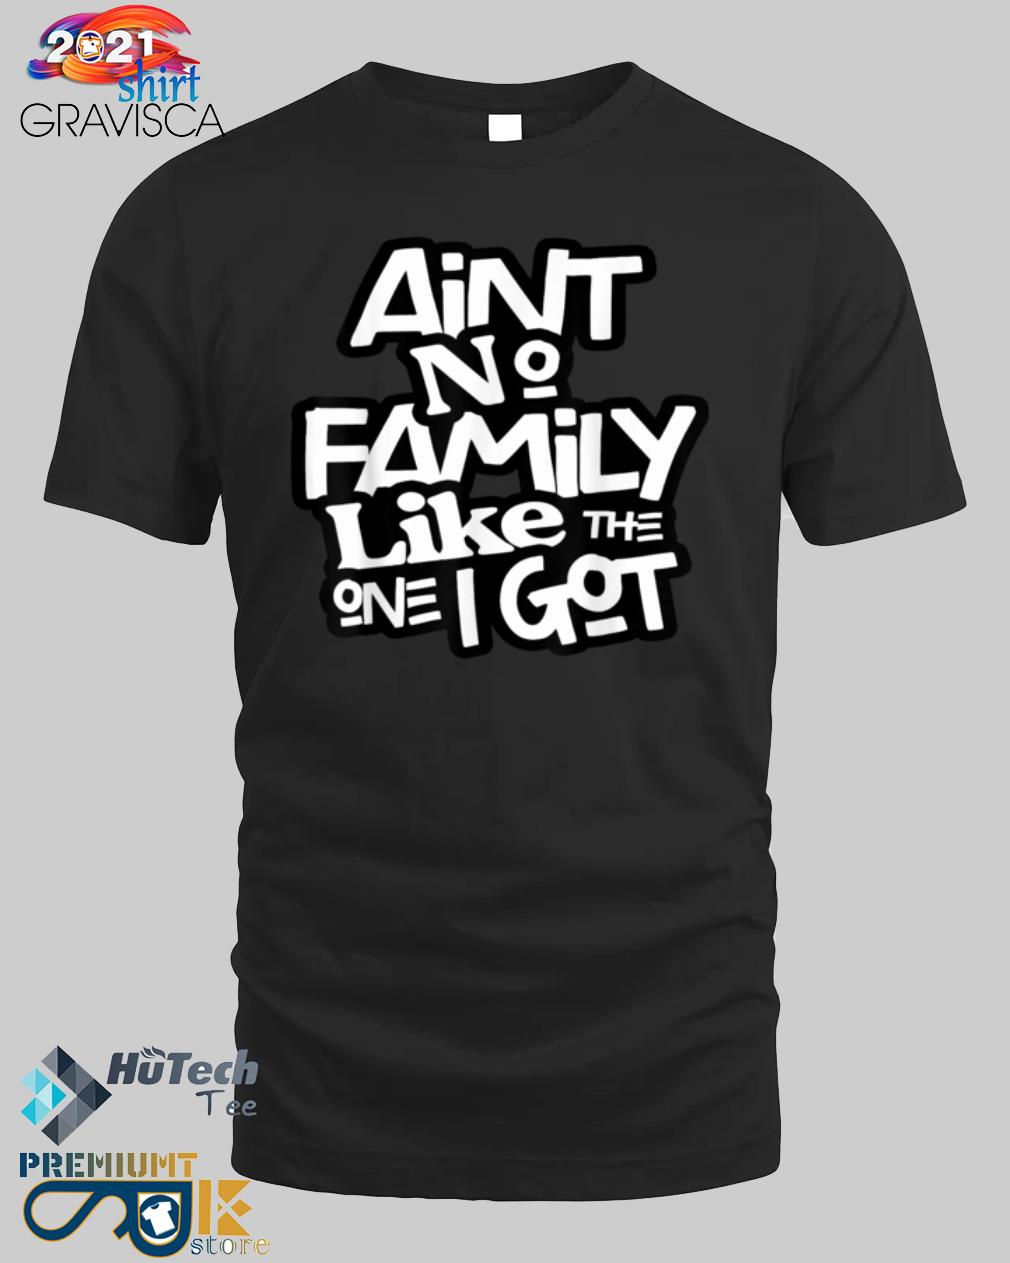 Ain't no family like the one I got for family shirt